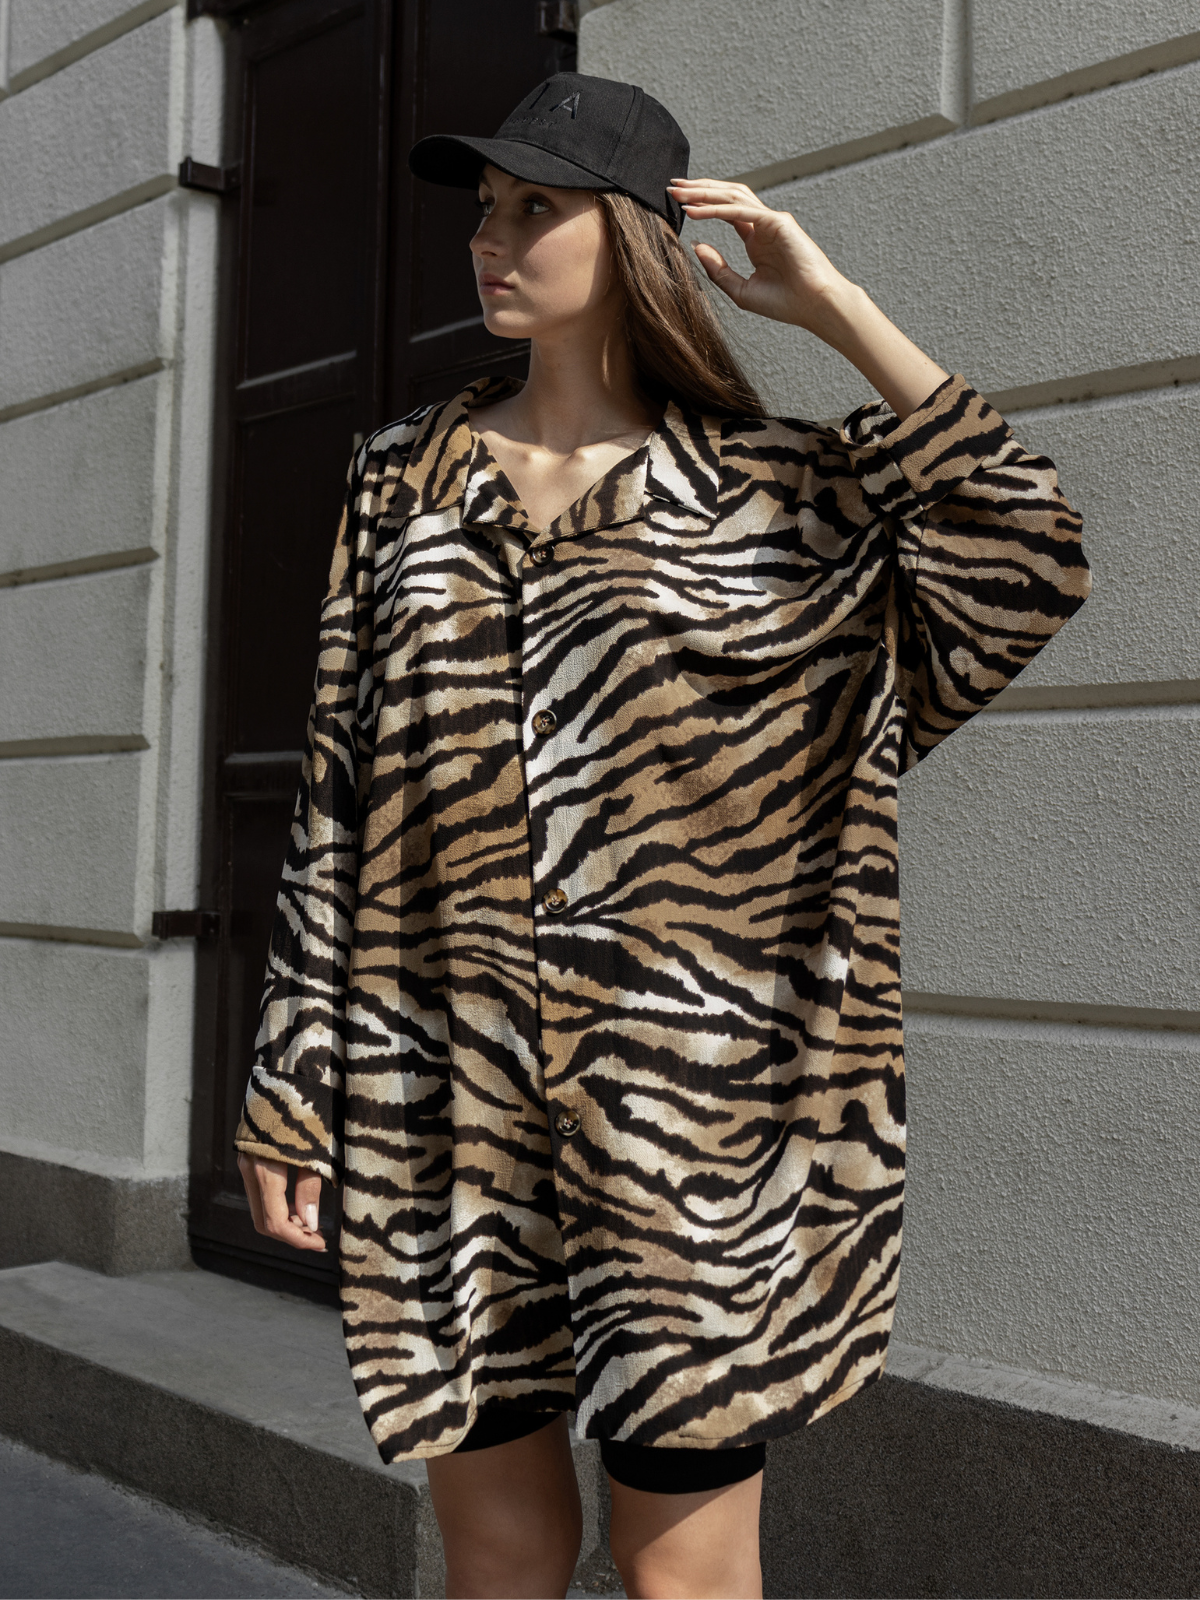 ROCKAWAY OVERSIZE SHIRT DRESS - tiger print